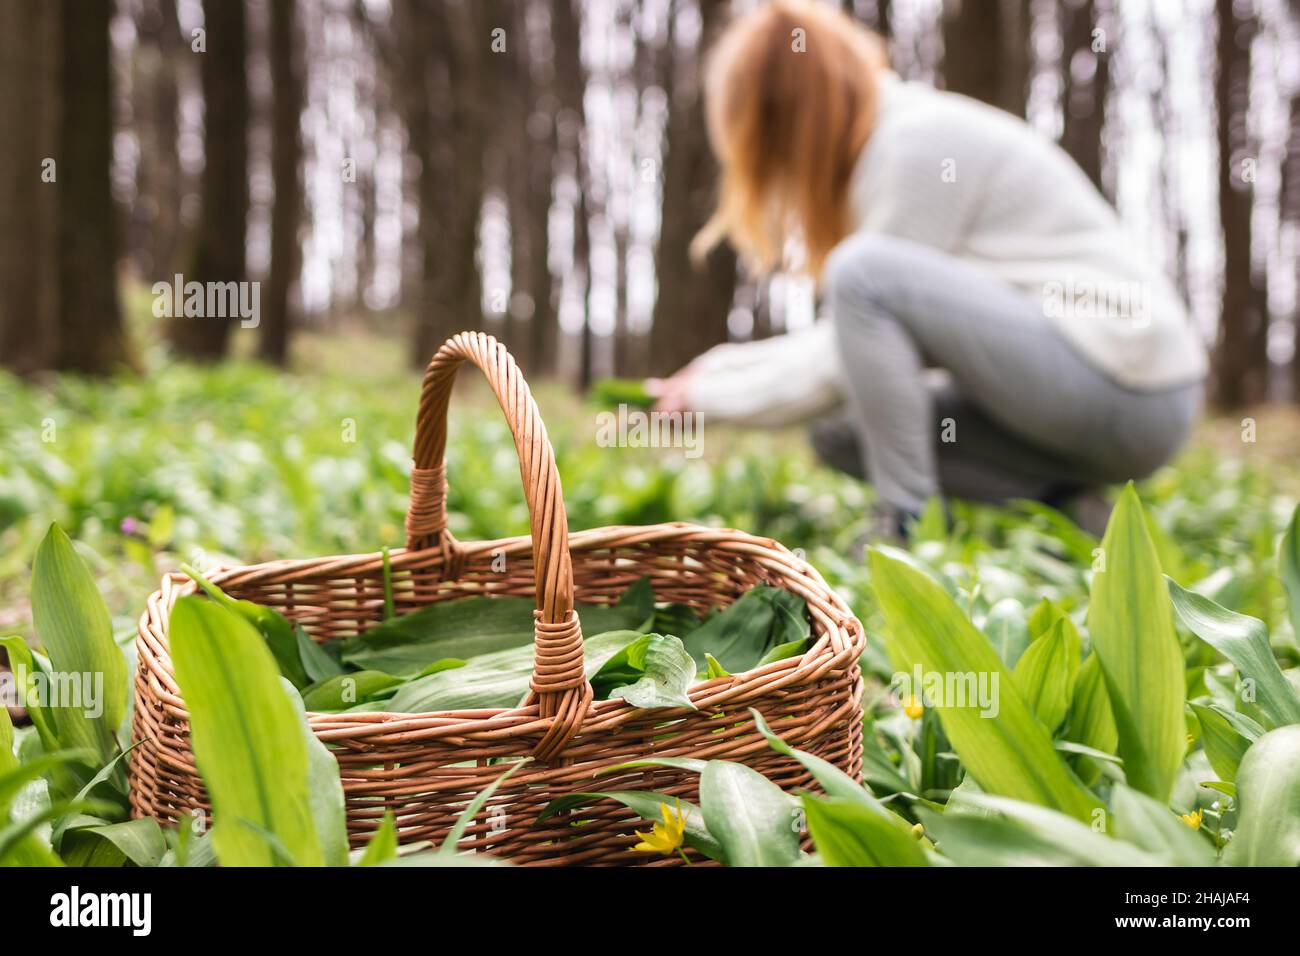 Woman picking wild garlic (allium ursinum) in forest. Harvesting Ramson leaves herb into wicker basket. Selective focus Stock Photo